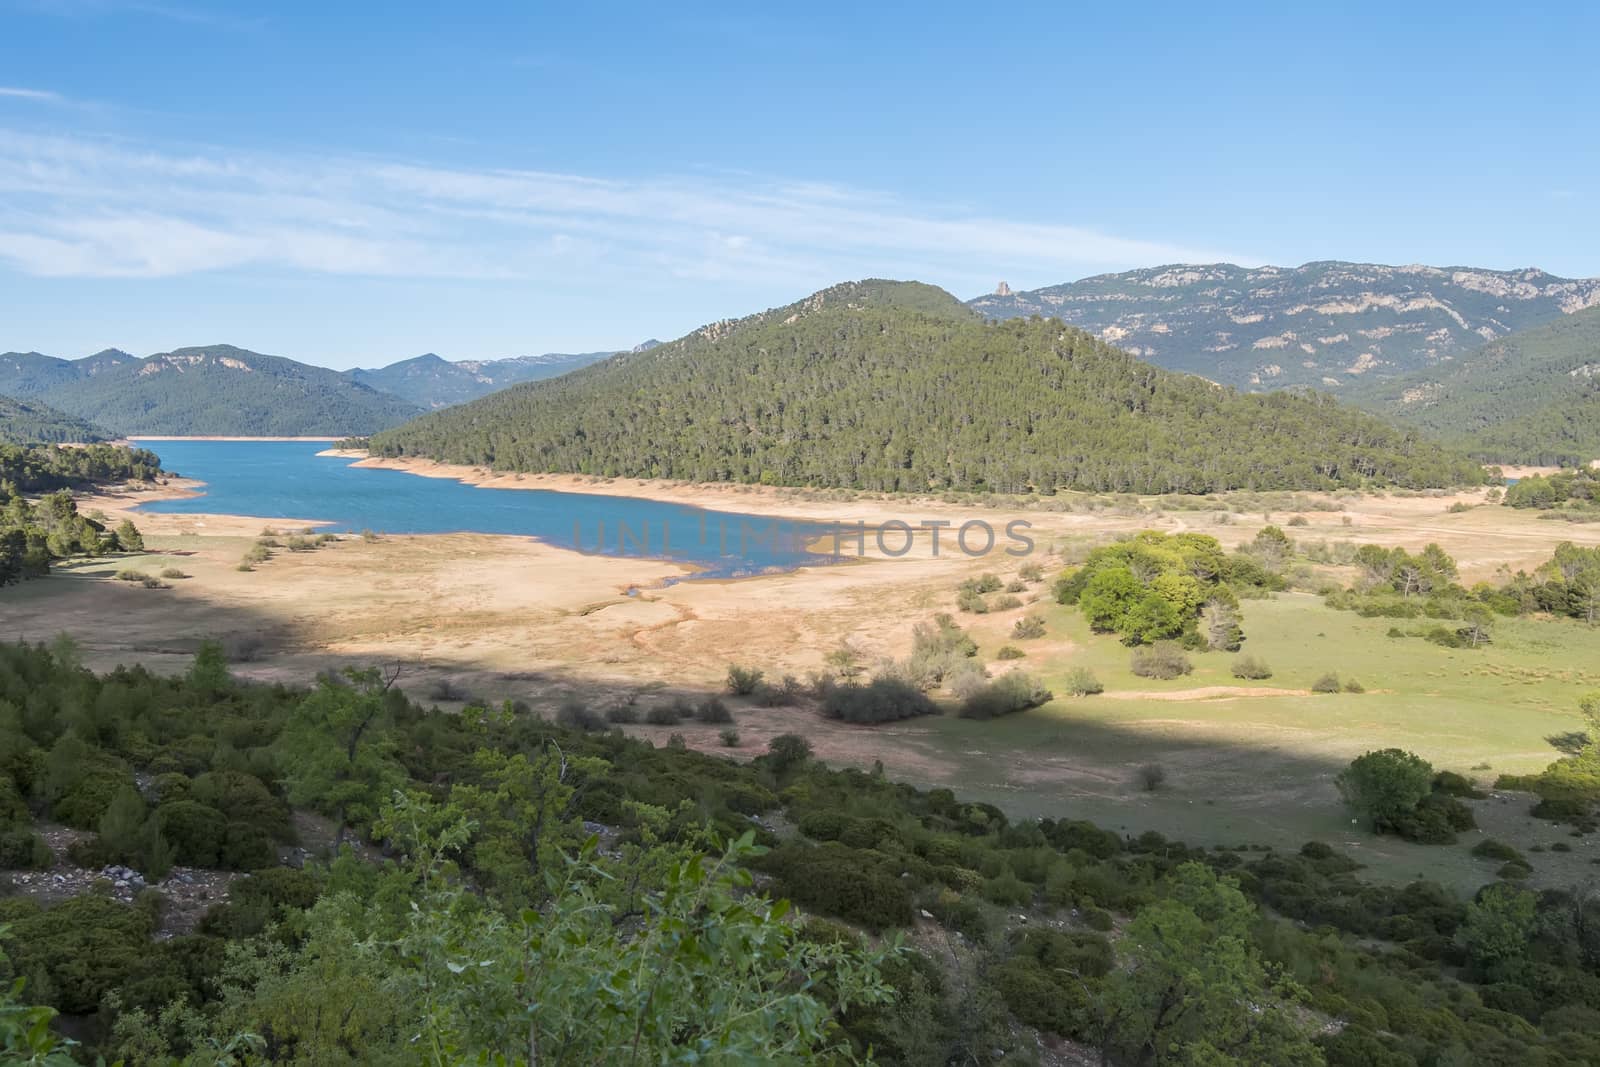 Rodriguez de la fuente lookout, Tranco reservoir, Cabeza de la viña Island, Cazorla, Jaen, Spain